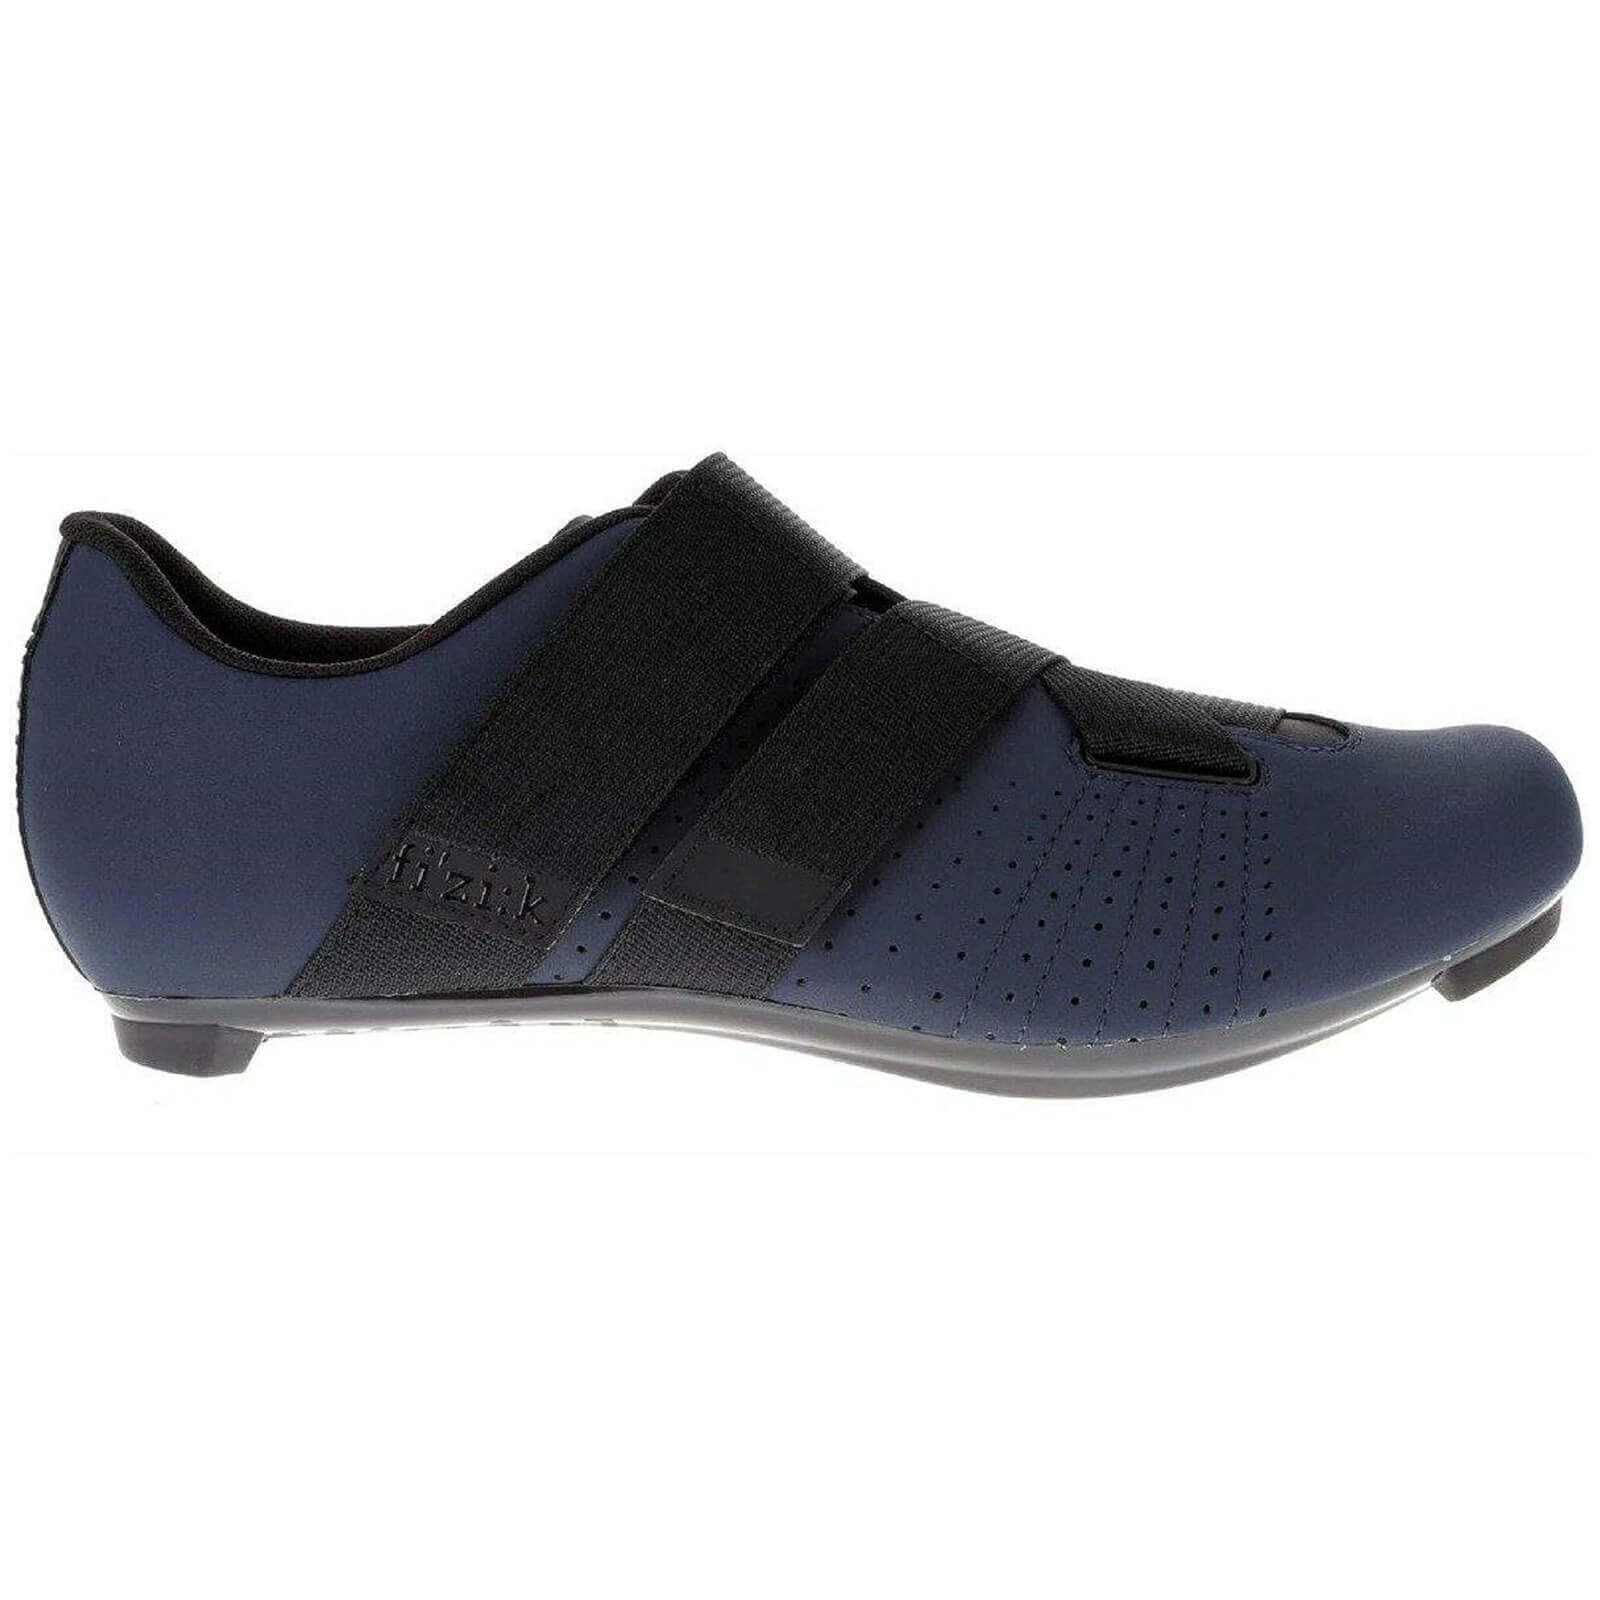 Fizik Tempo Powerstrap R5 Road Shoes - EU 37 - Navy/Black